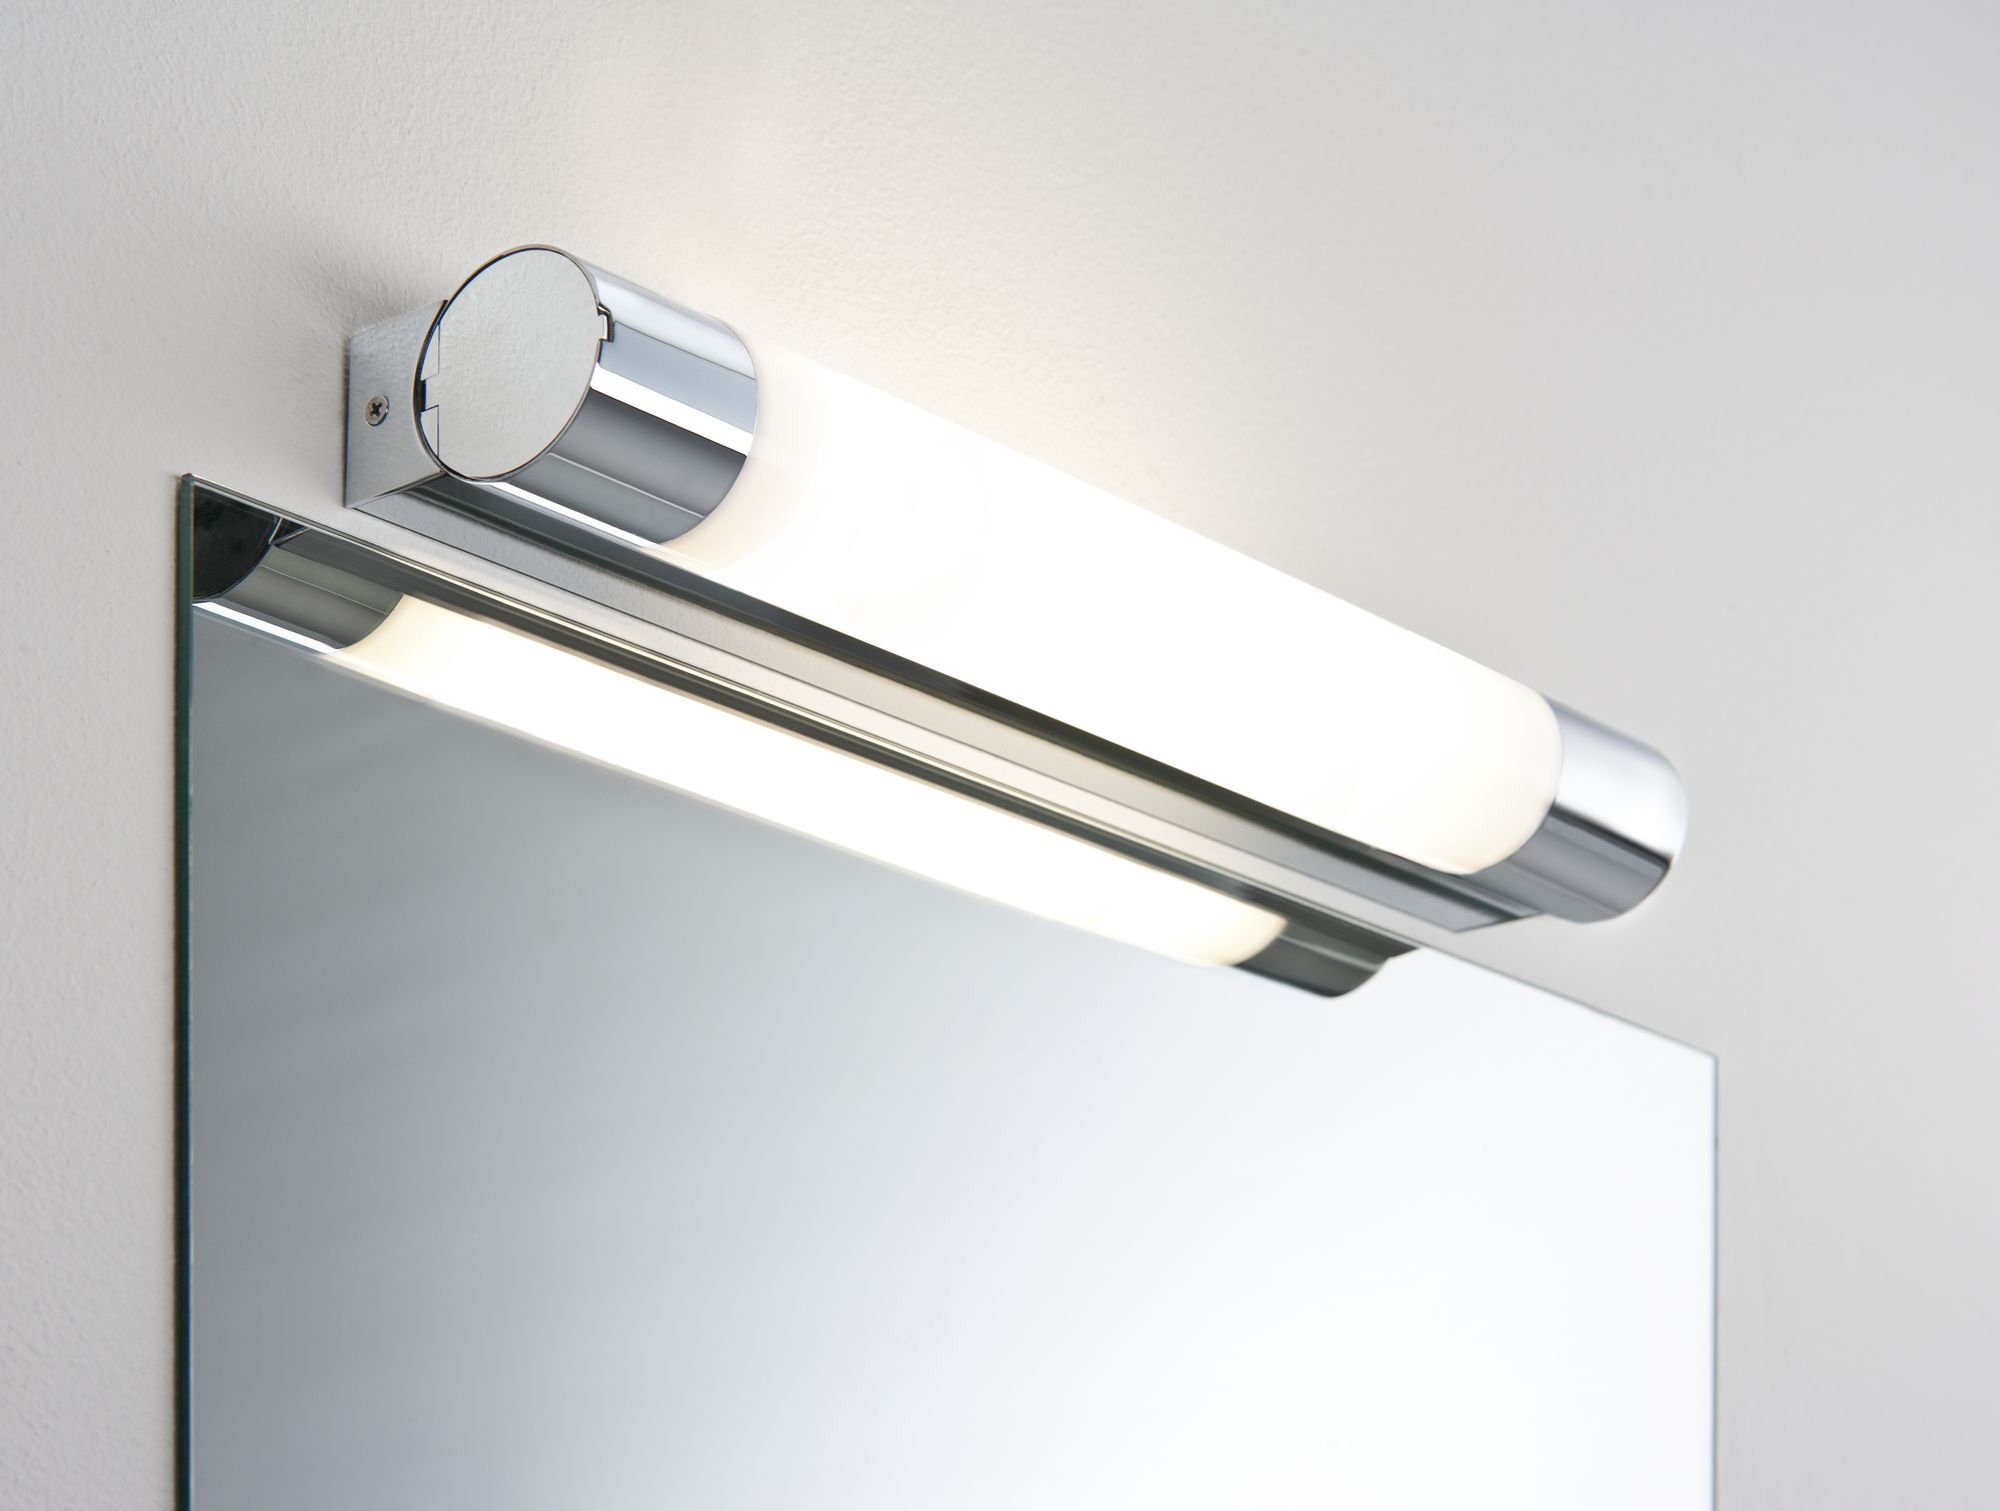 Spiegelleuchte Badezimmerleuchte integriert, fest Paulmann Warmweiß, Orgon, LED